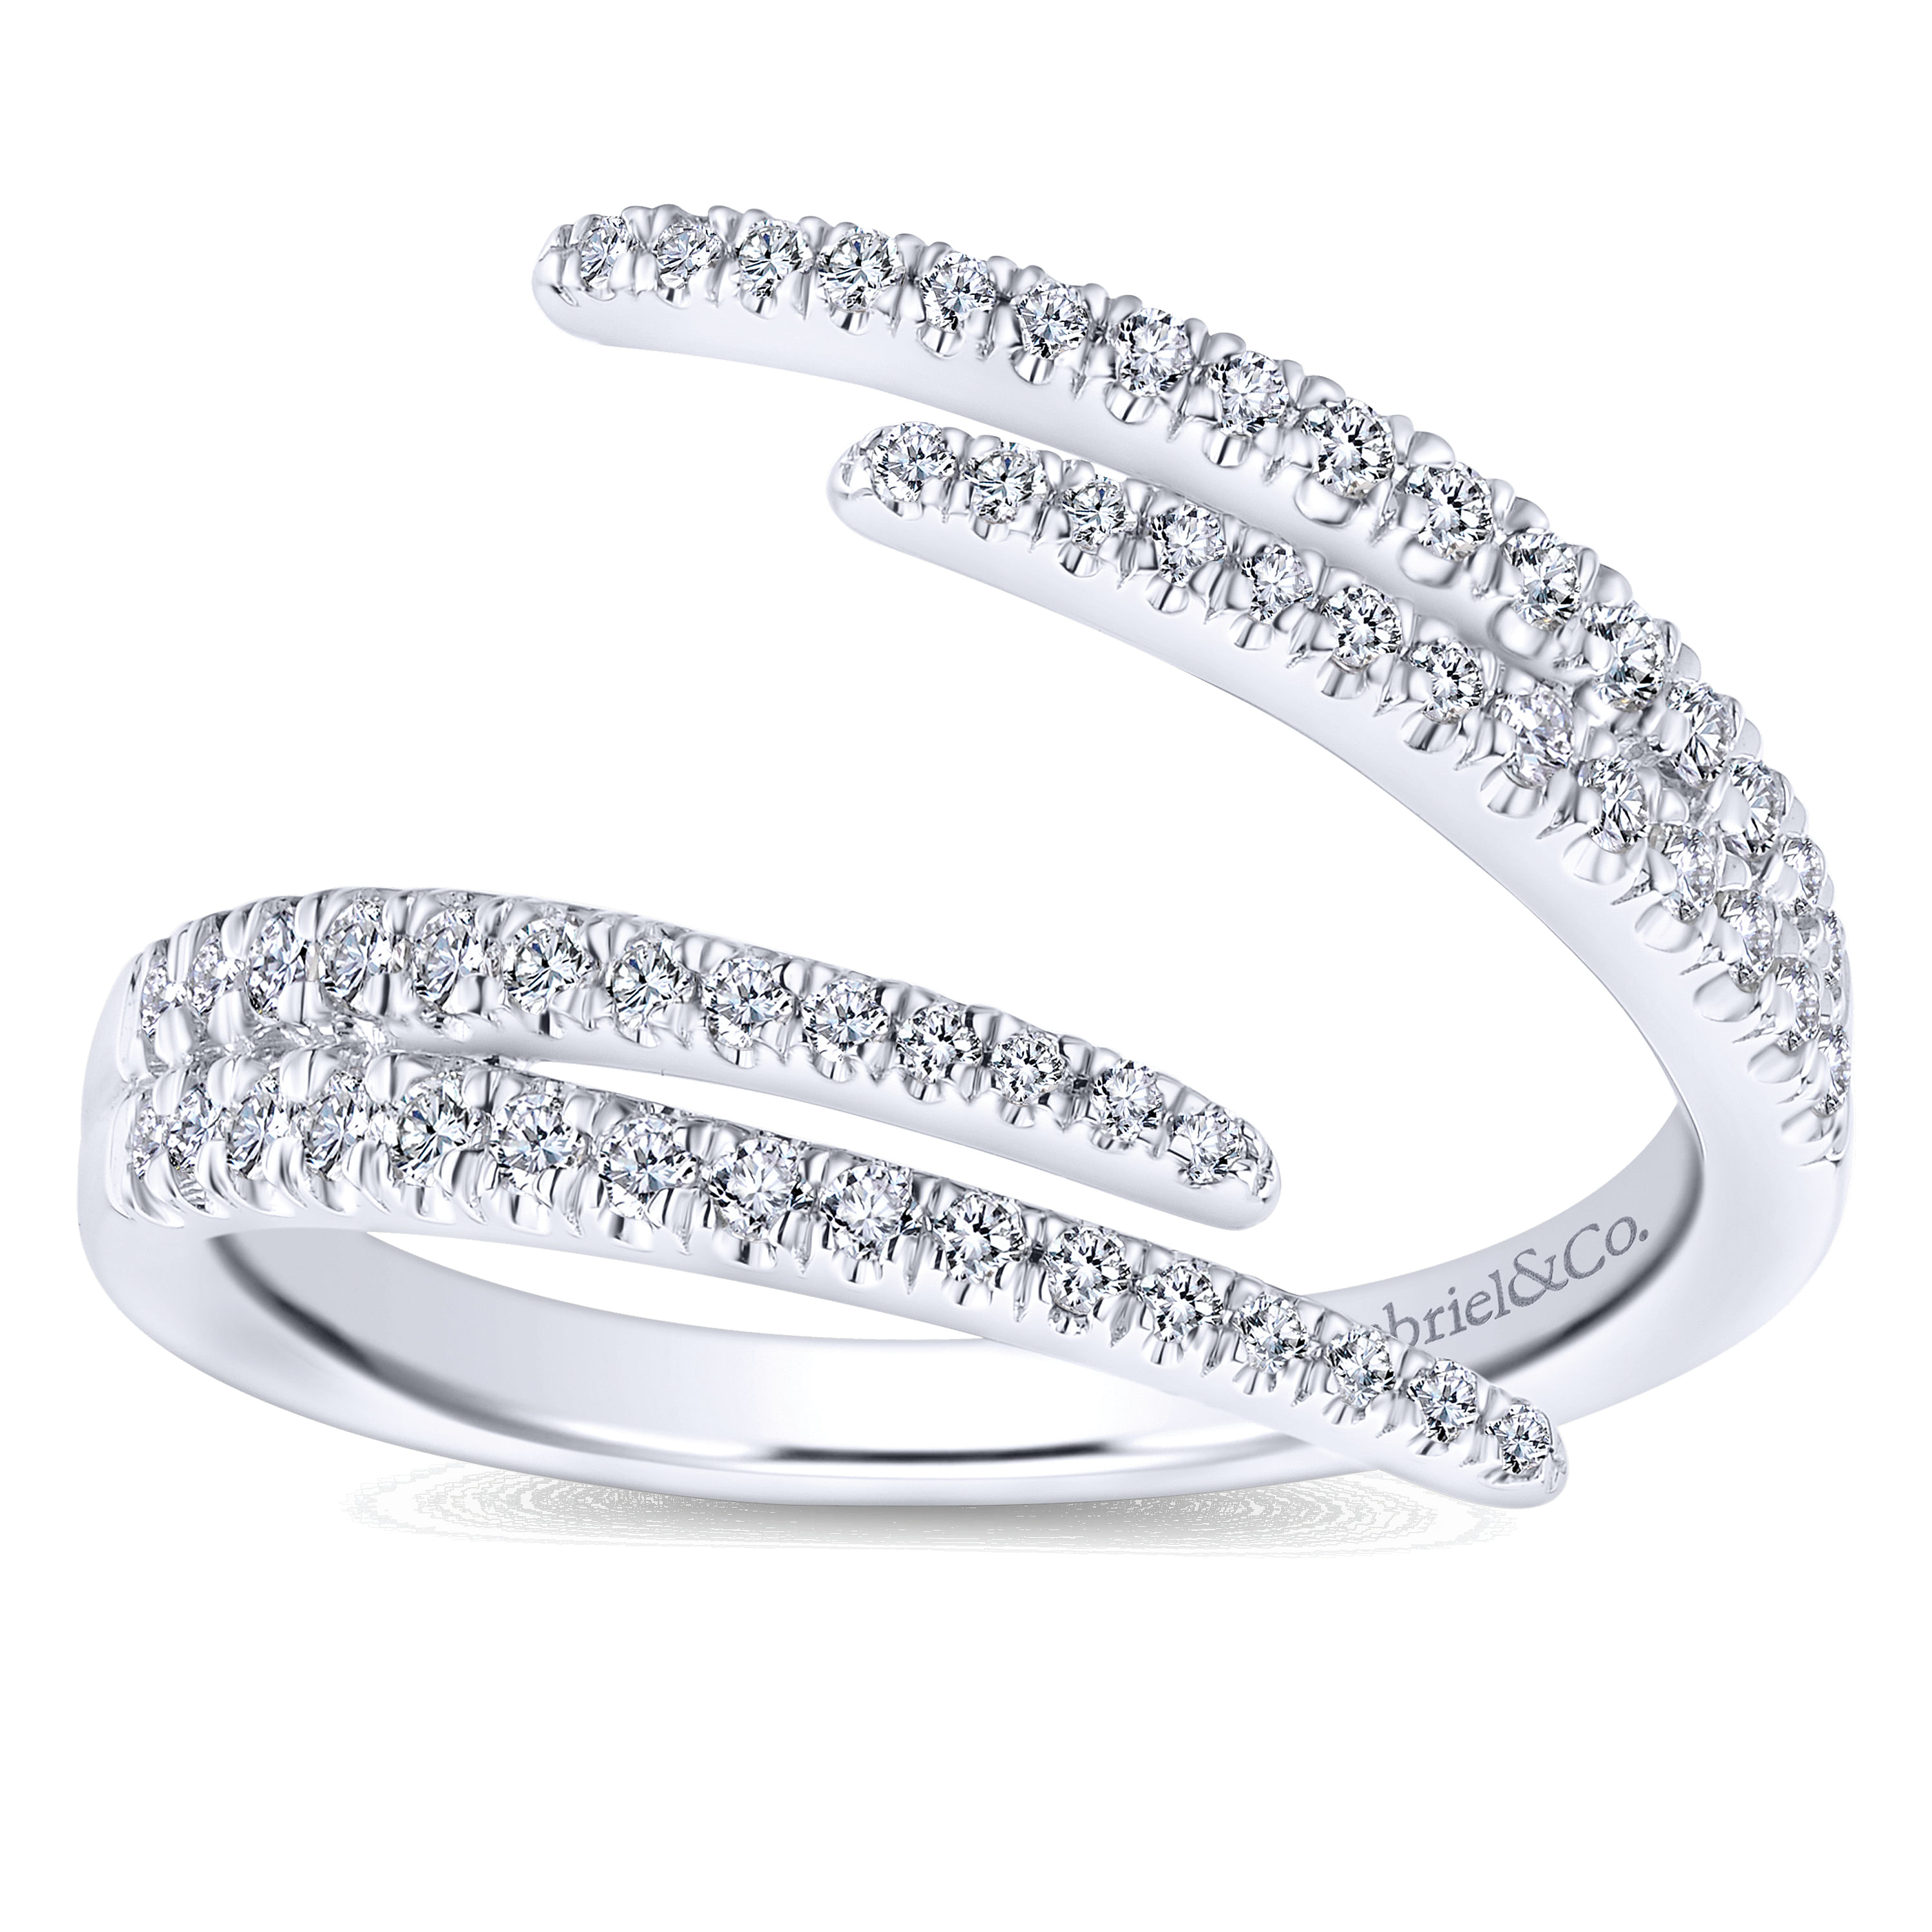 14K White Gold Diamond Fashion Ladies Ring